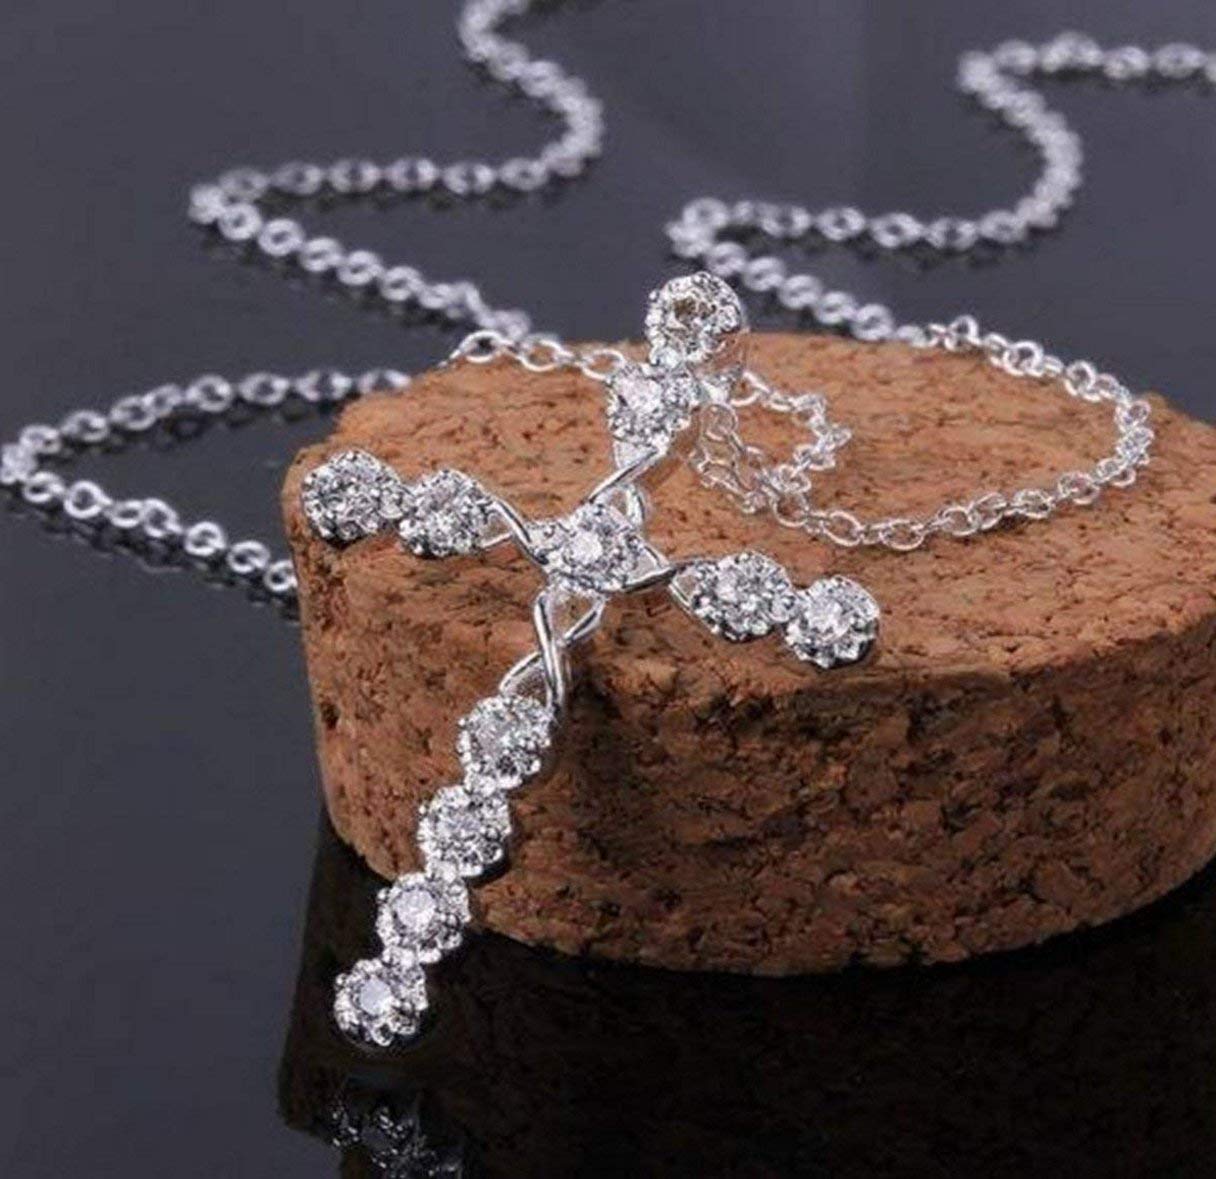 Beautiful Silver Chrystal Cross Pendant Just $1.30 + FREE Shipping!